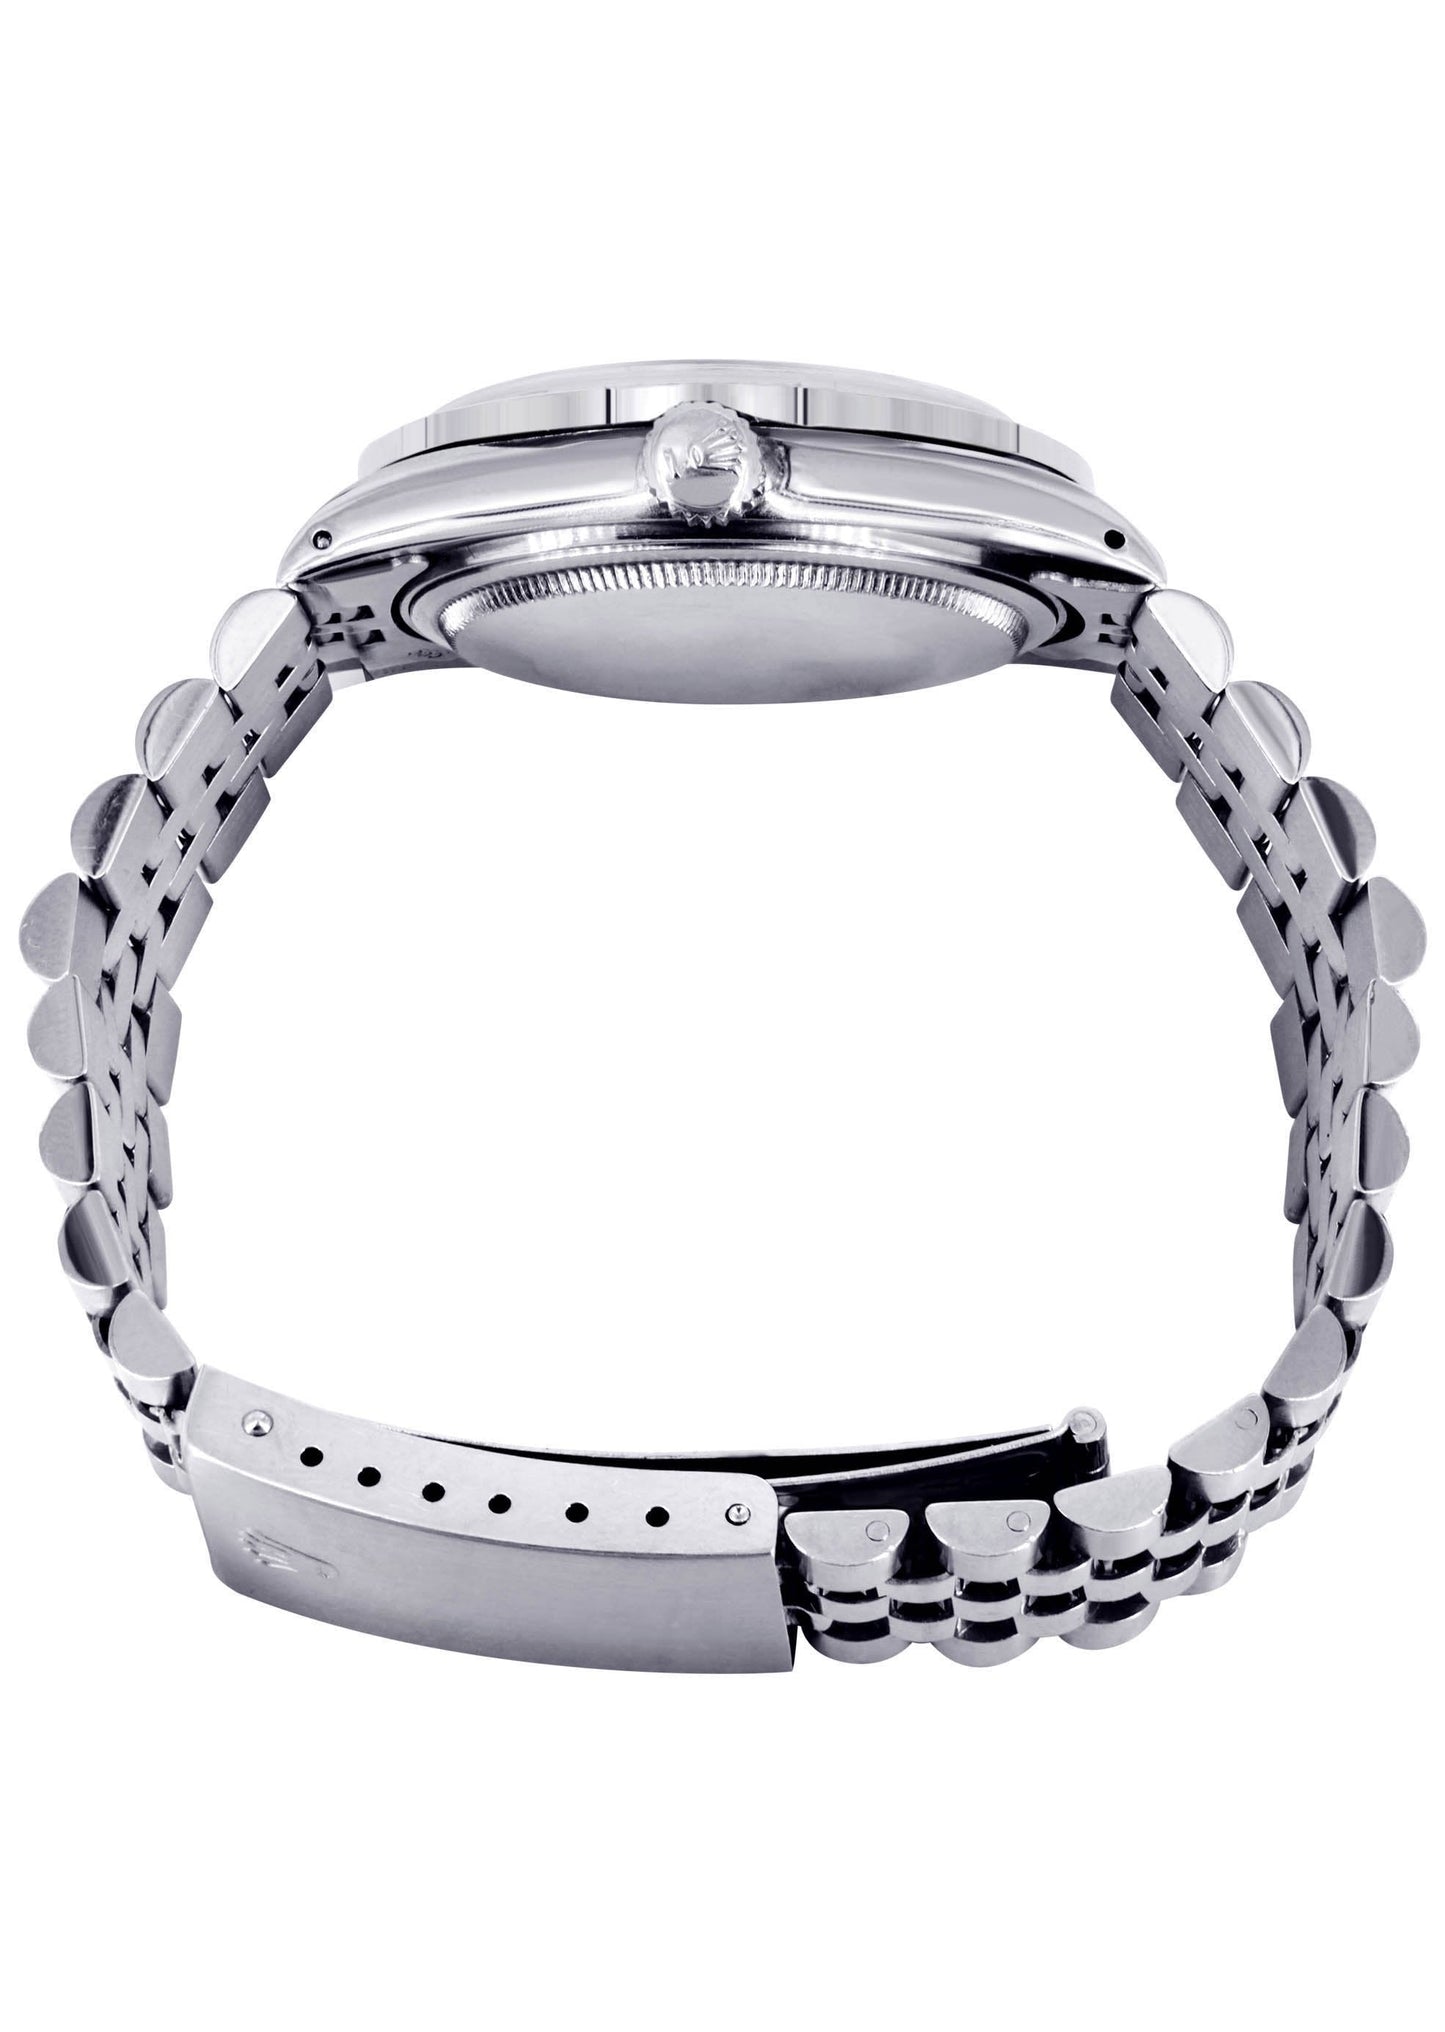 Diamond Gold Rolex Watch For Men 16200 | 36Mm | Rainbow Sapphire Bezel | Brown Arabic Numeral Dial | Jubilee Band